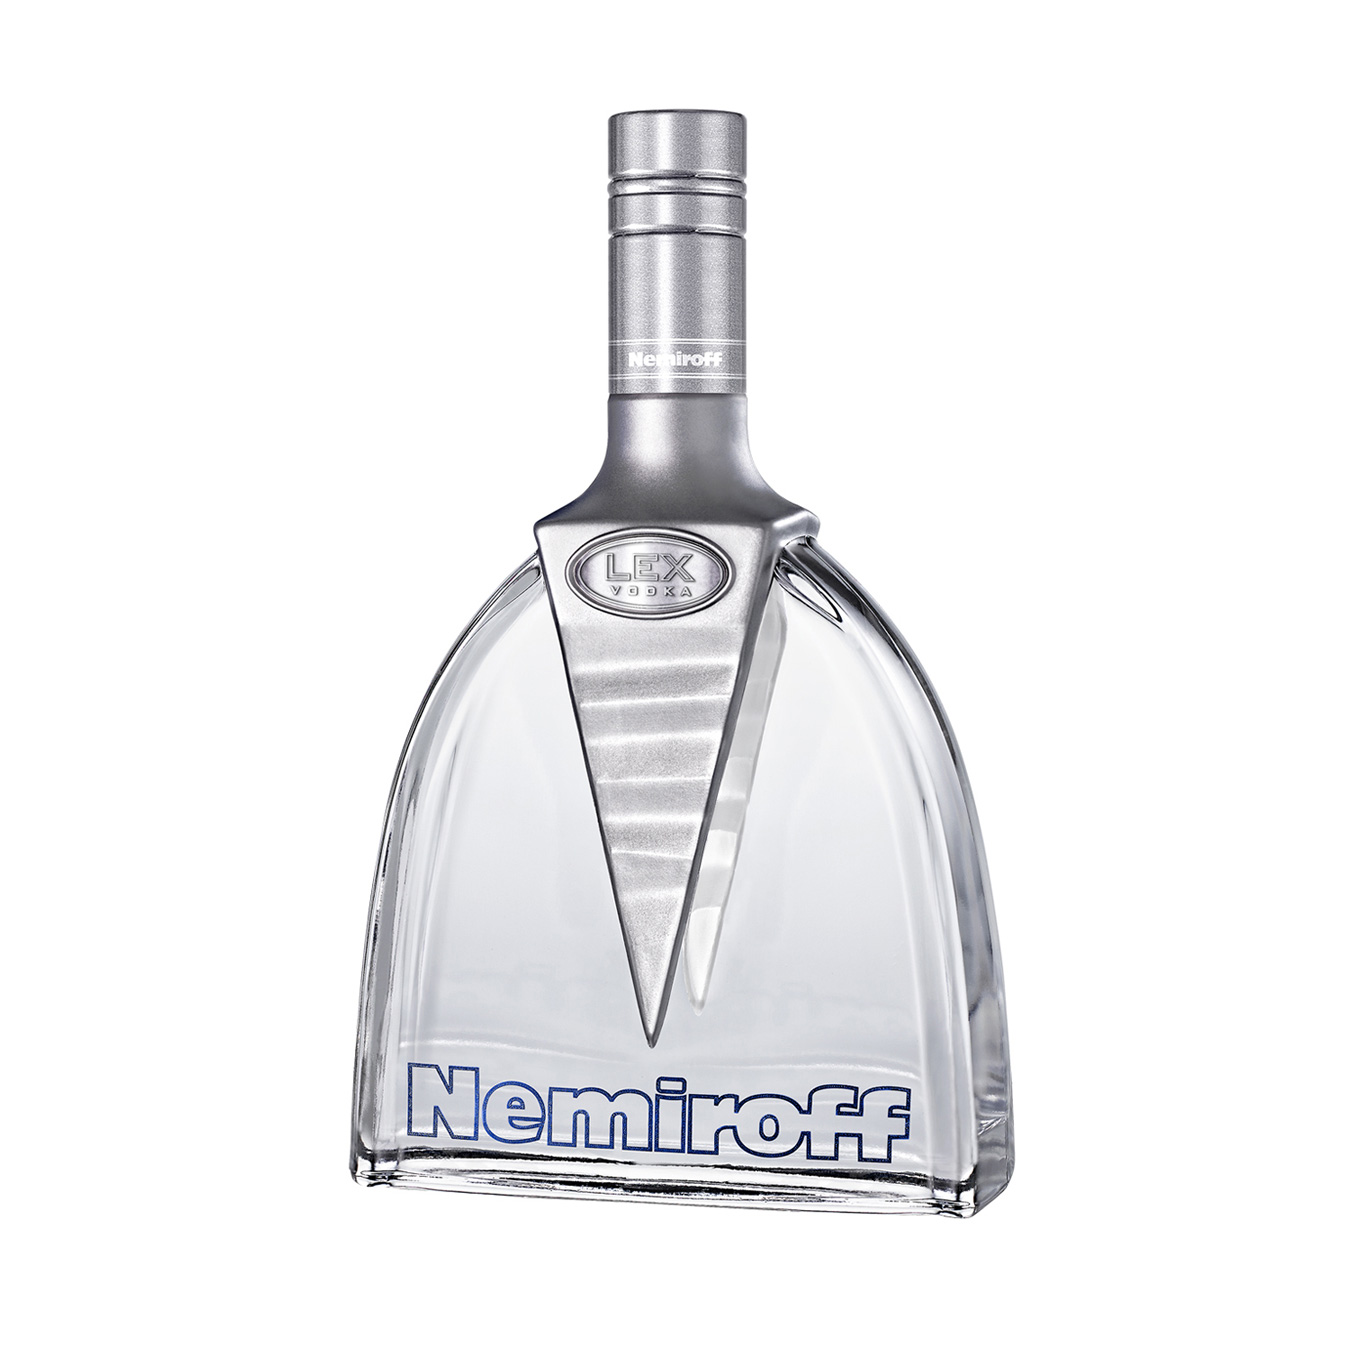 Nemiroff Lexx vodka 40% 0,7l 2